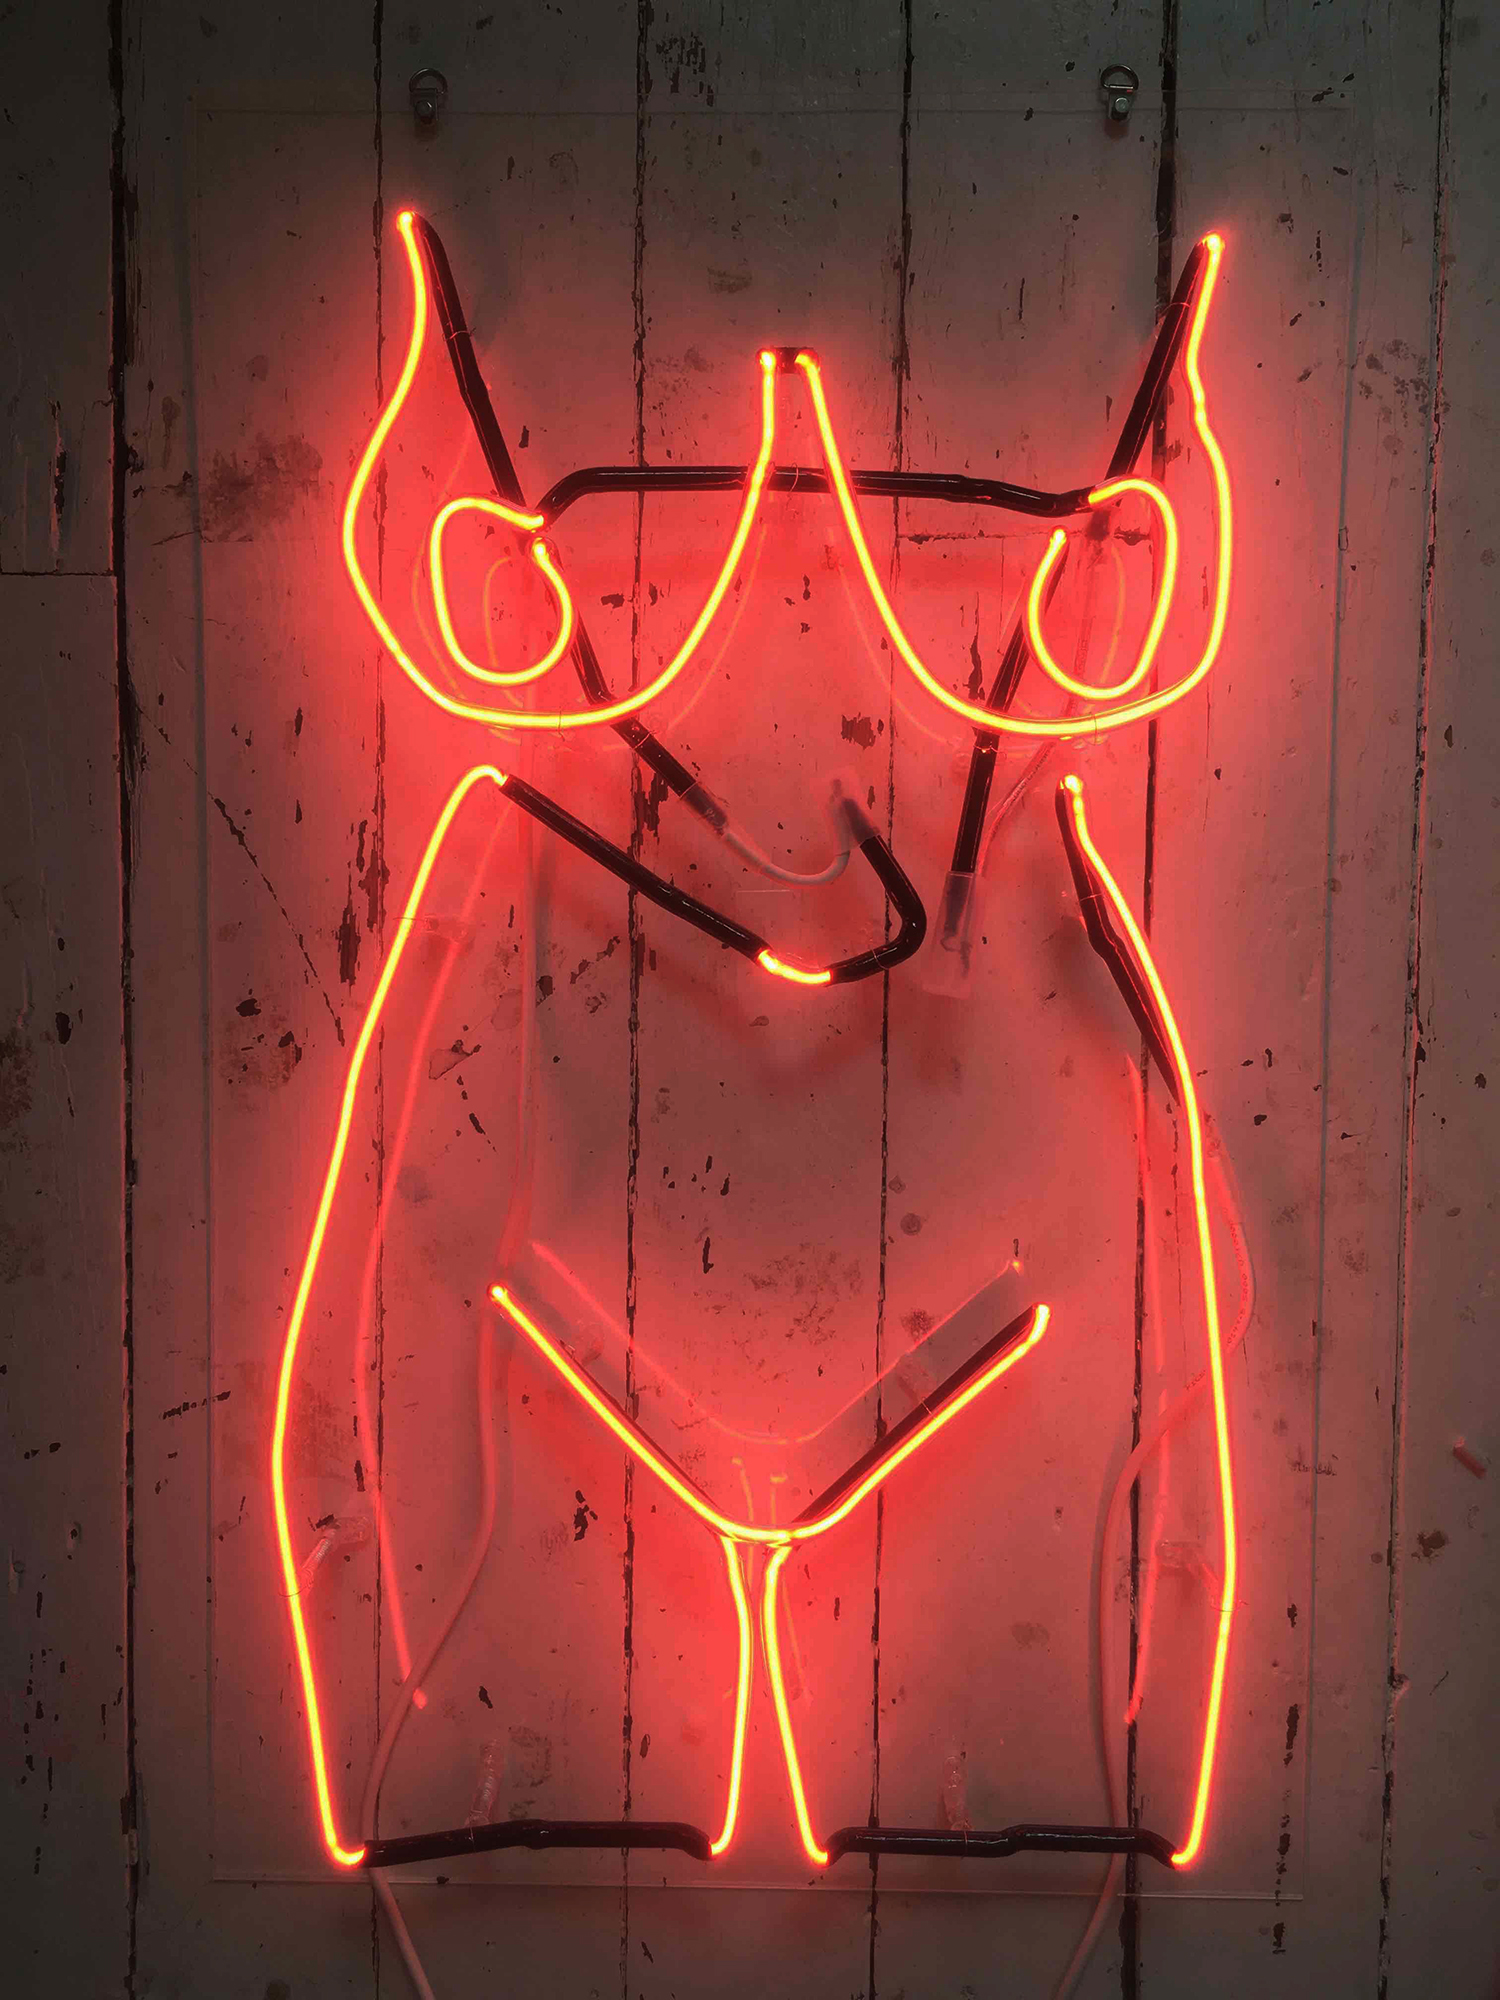 neon light artist a feminist light artist forges neon nudes vice. 